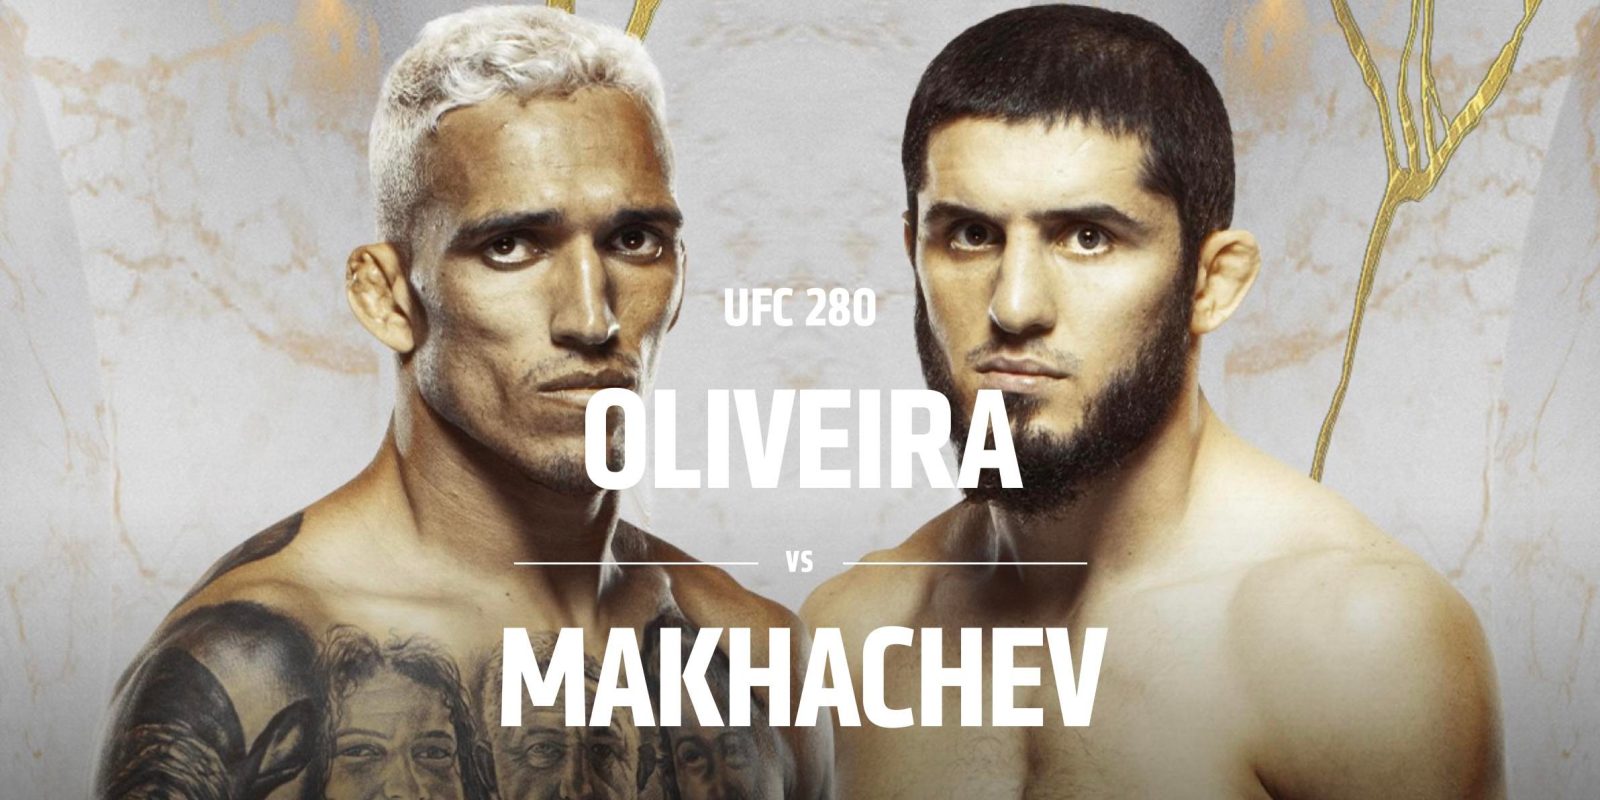 watch UFC 280 Oliveira vs Makhachev